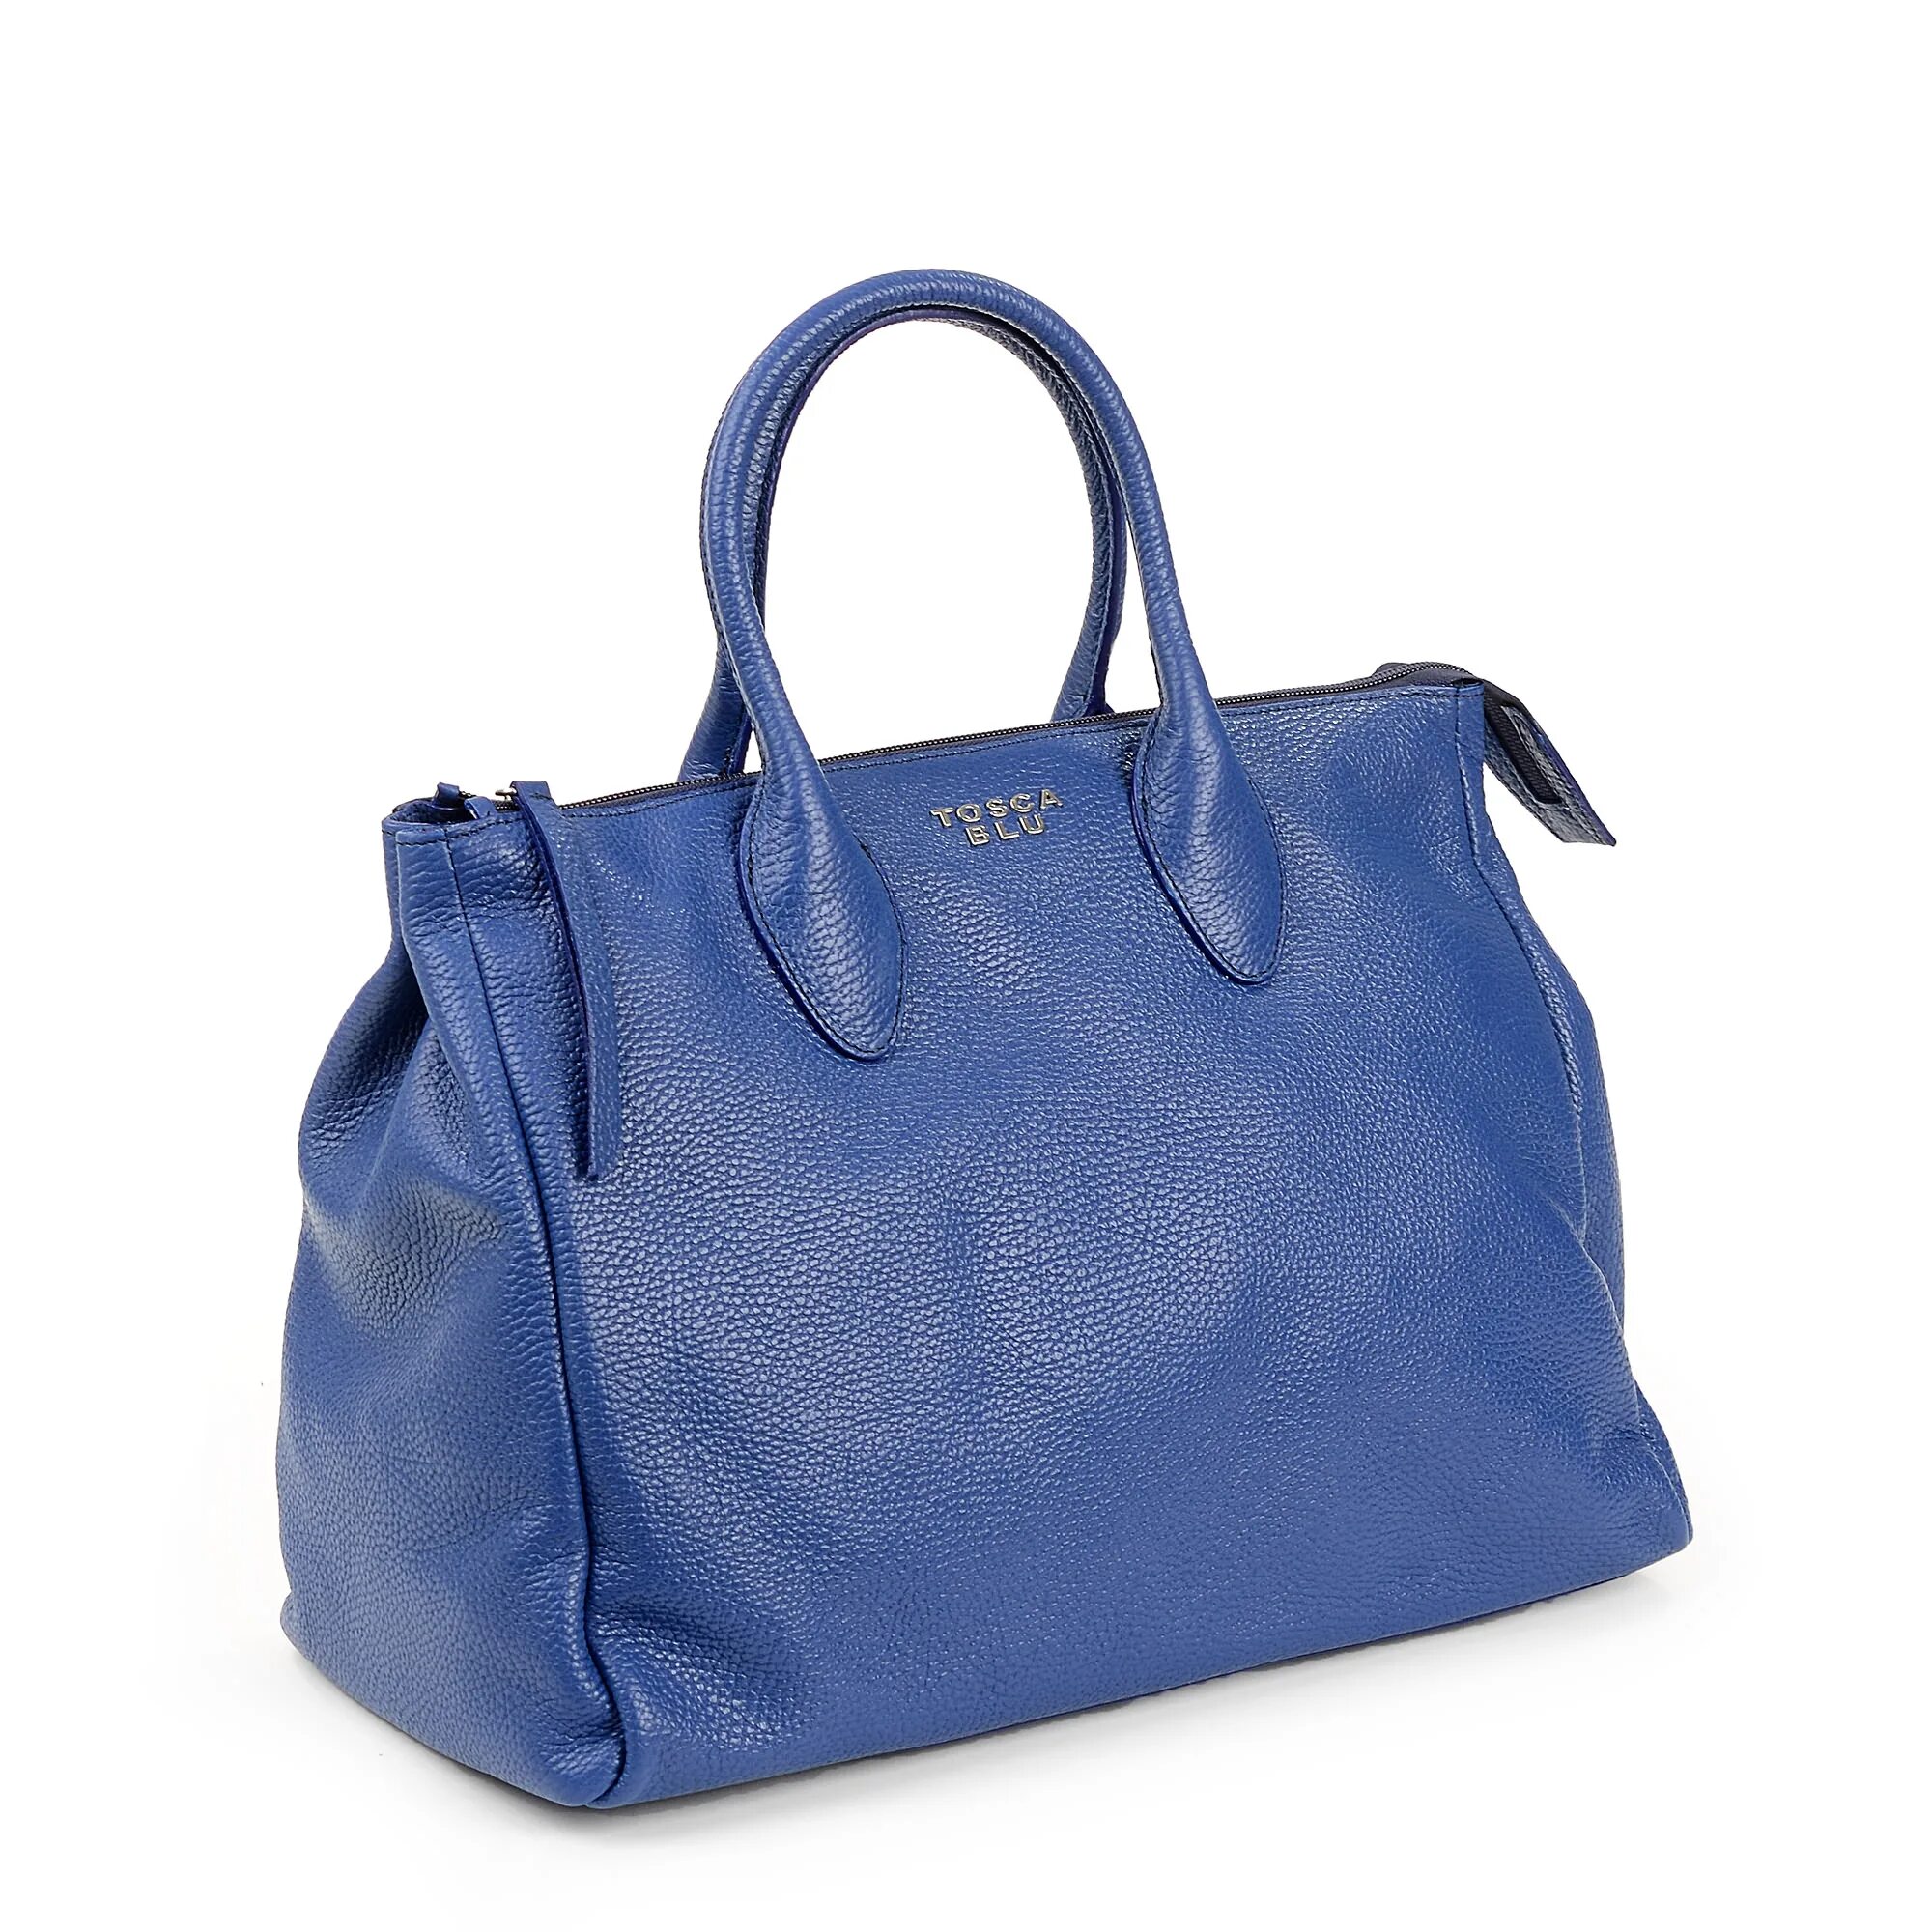 Tosca Blu сумки. Tosca Blu сумка голубая. Tosca Blu сумка ts20nb120 Blue. Tosca Blu сумка ts19rb371 Blue.